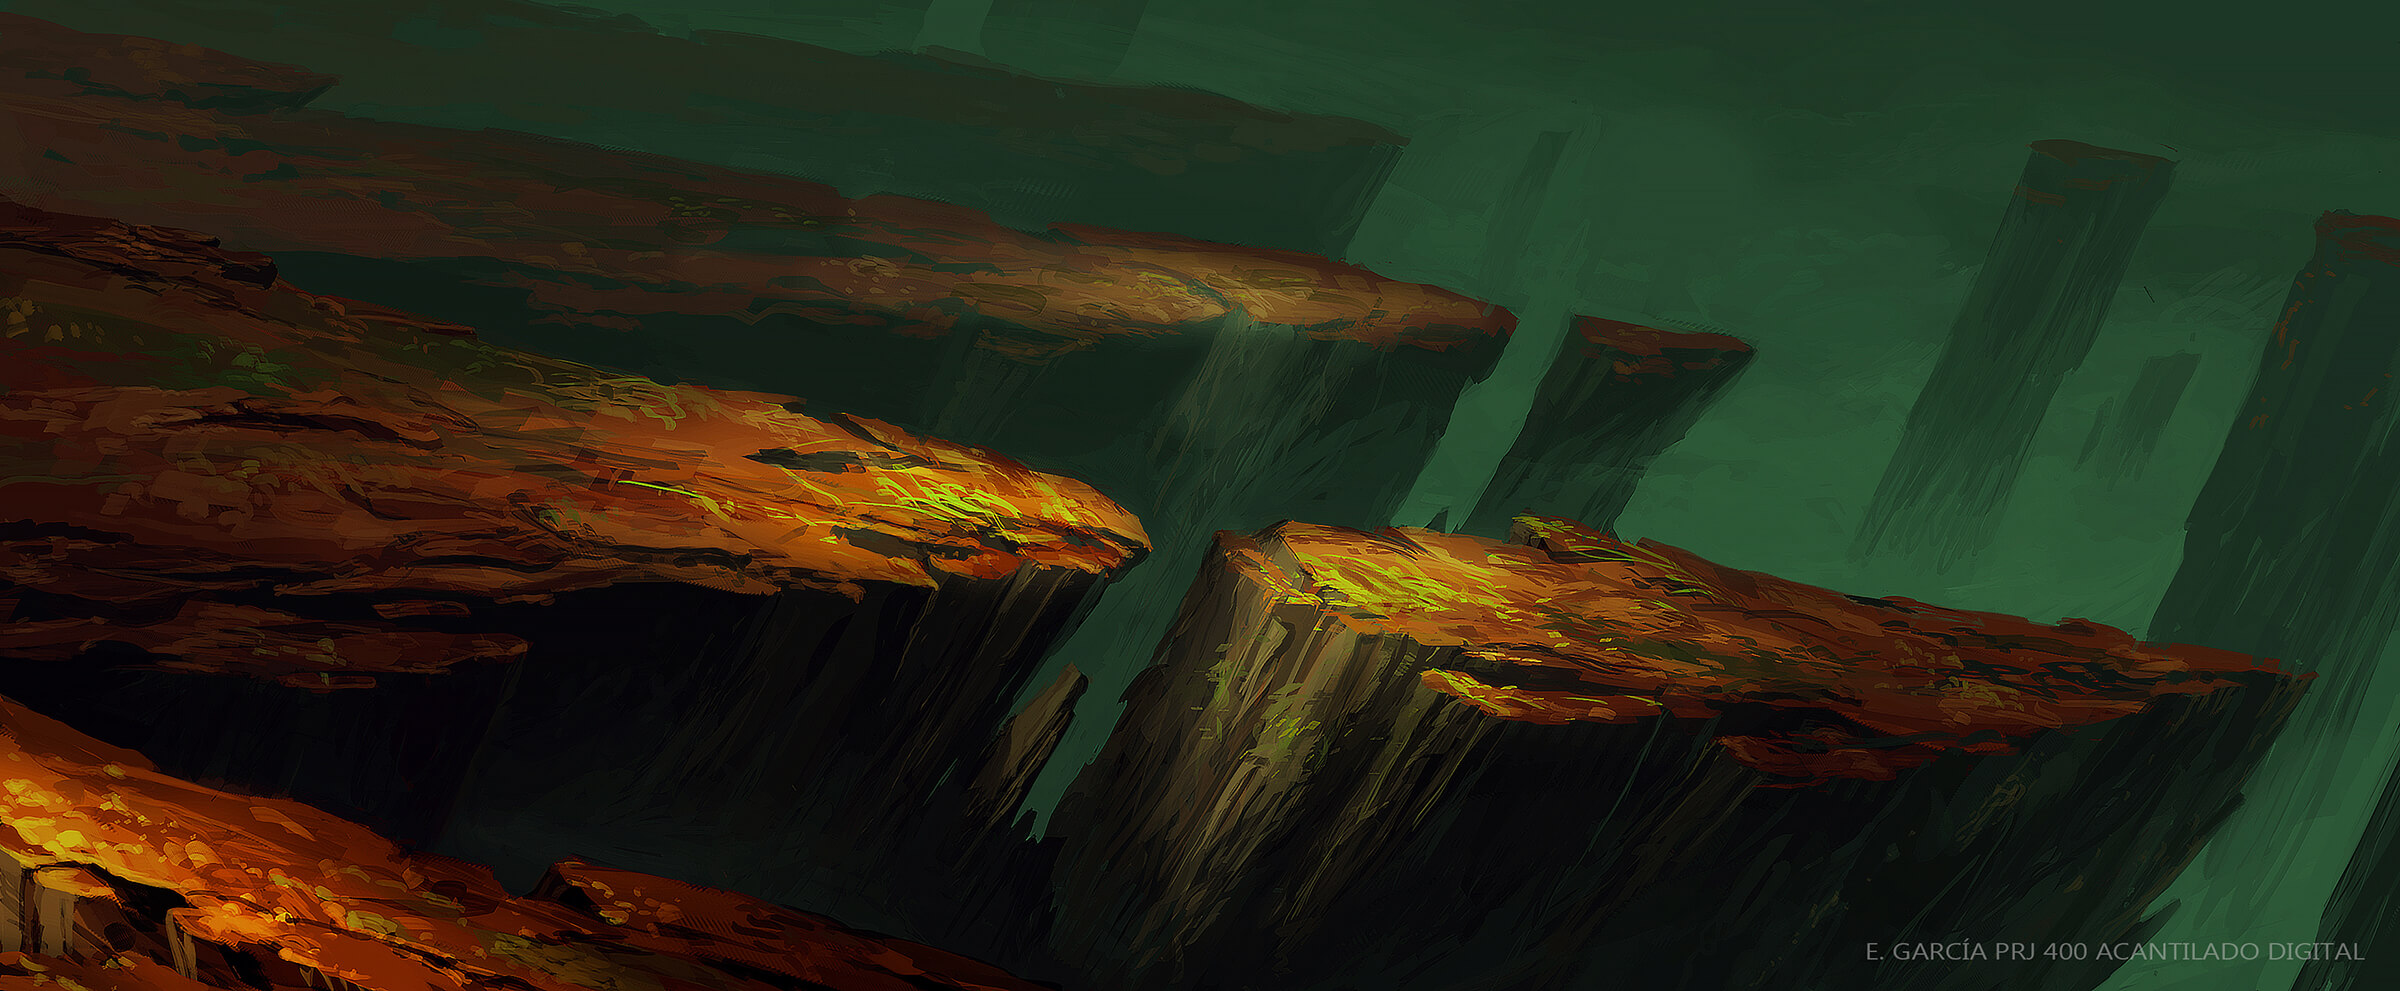 Jagged, red cliffs in an alien landscape jut ominously into a dark green sky.